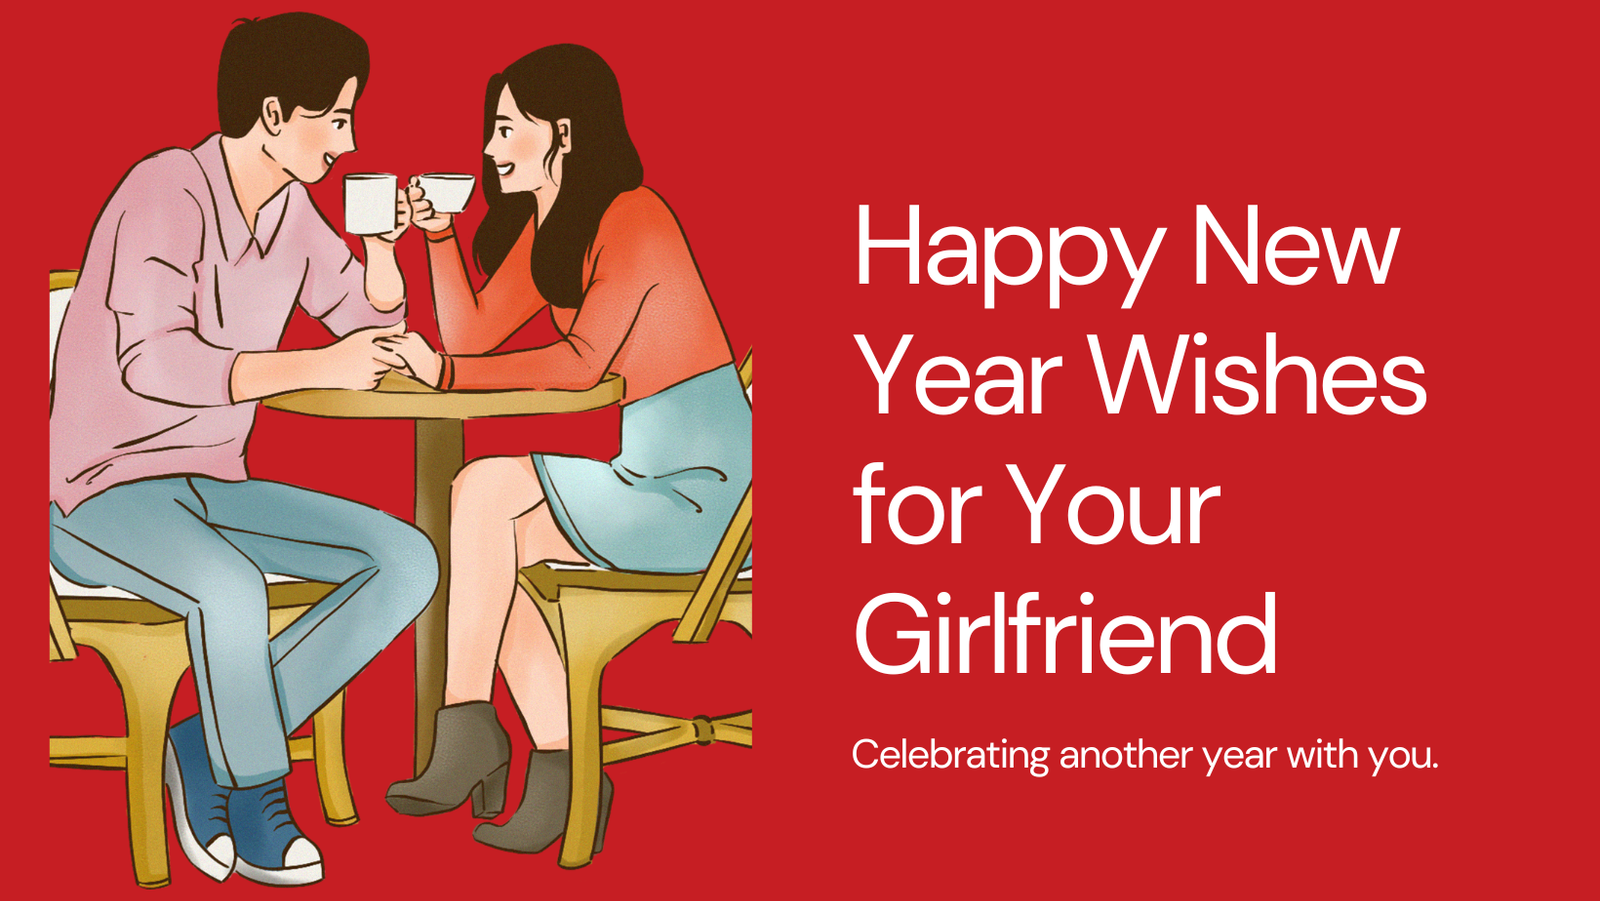 15 Heartfelt Happy New Year Wishes for Girlfriend